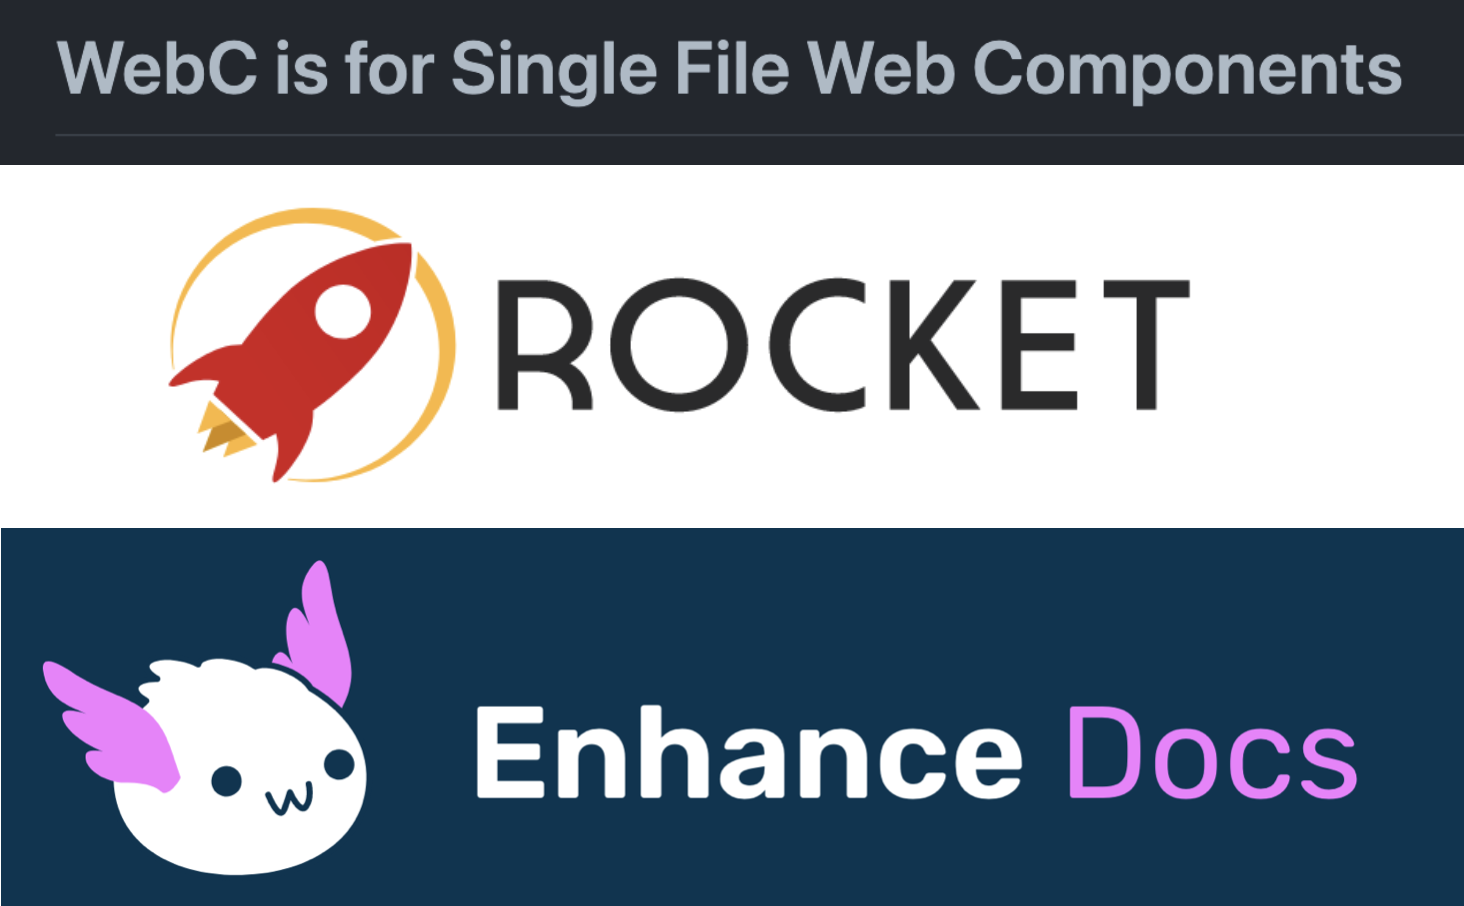 WebC, Rocket and Enhance logos